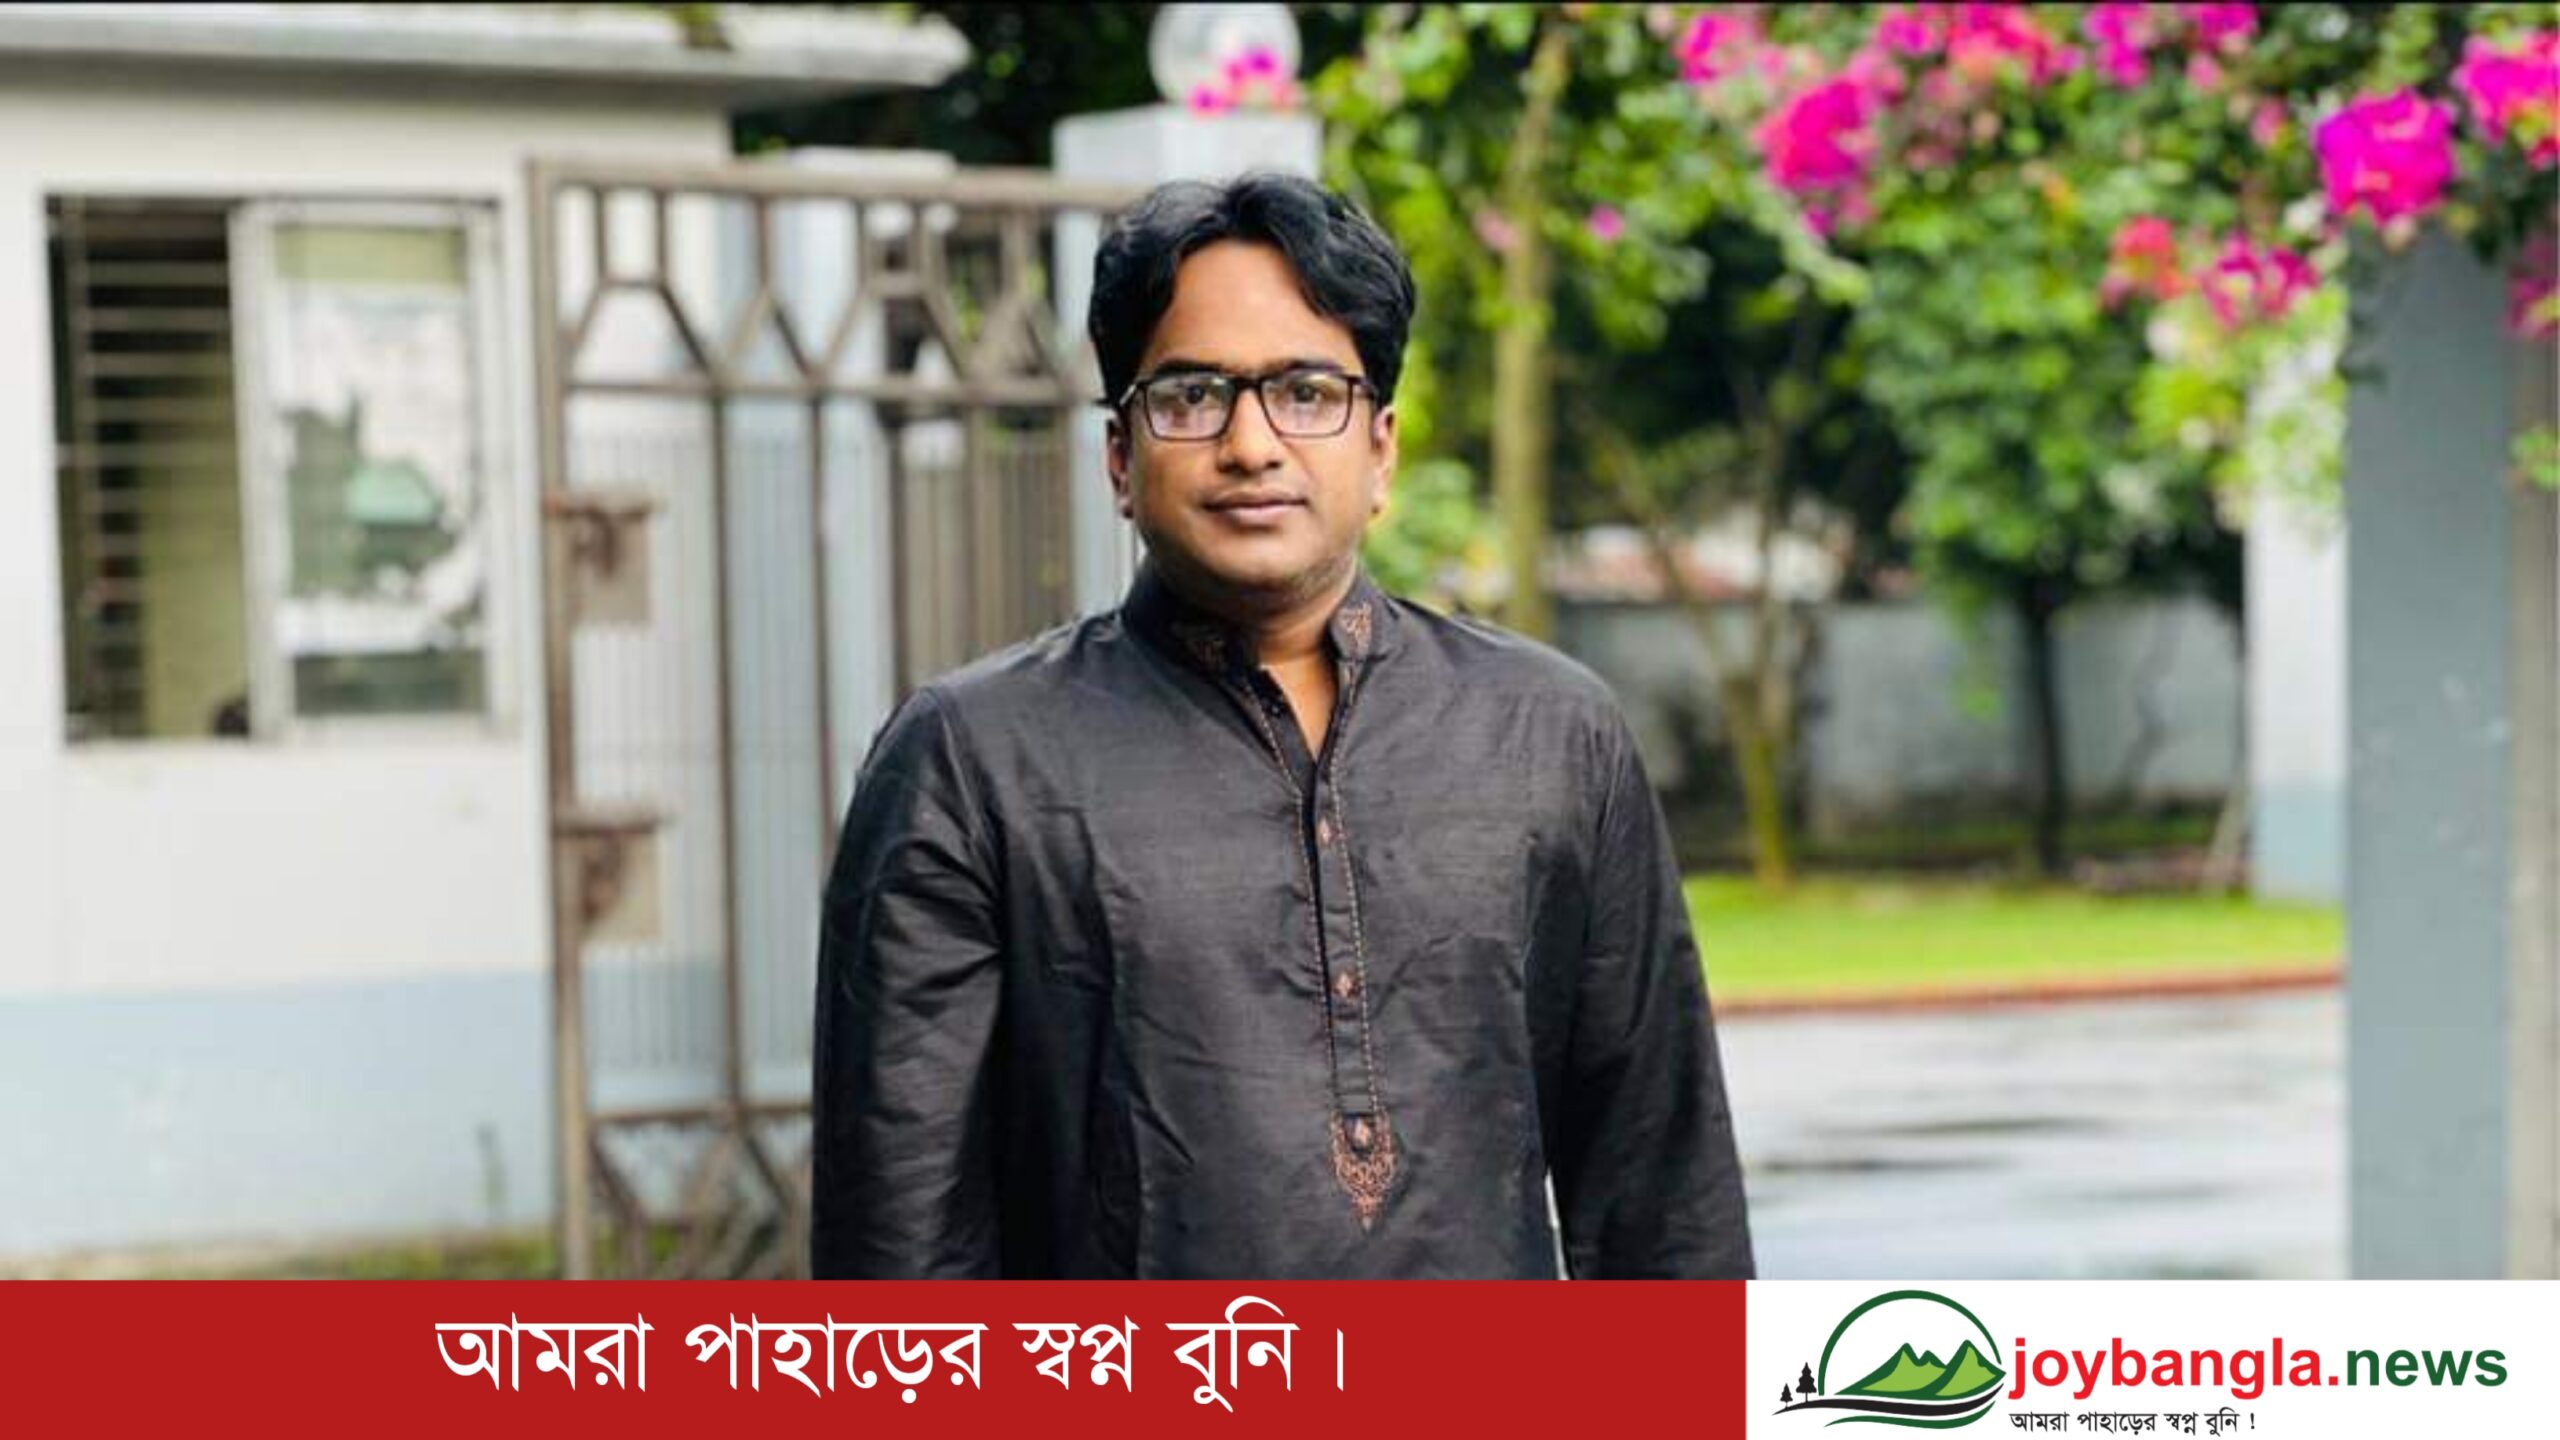 Joy bangla.news এর সম্পাদক মোঃ কাউছার সোহাগ এর জন্মদিন আজ